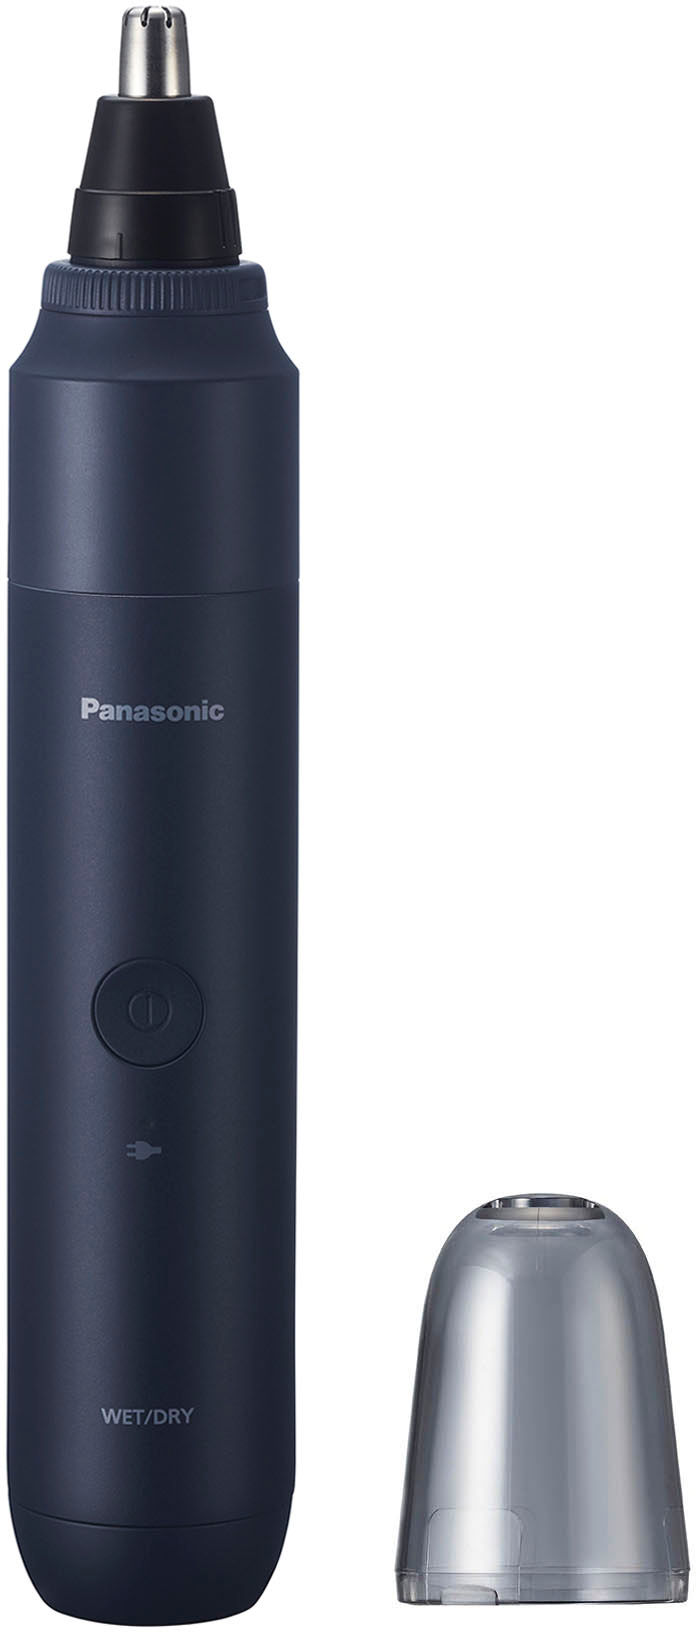 Kit Electric in Rechargeable All - Panasonic Pristine Buy ER-PRISTINE-BB Navy Shaver 1 Kit Wet/Dry MultiShape Best